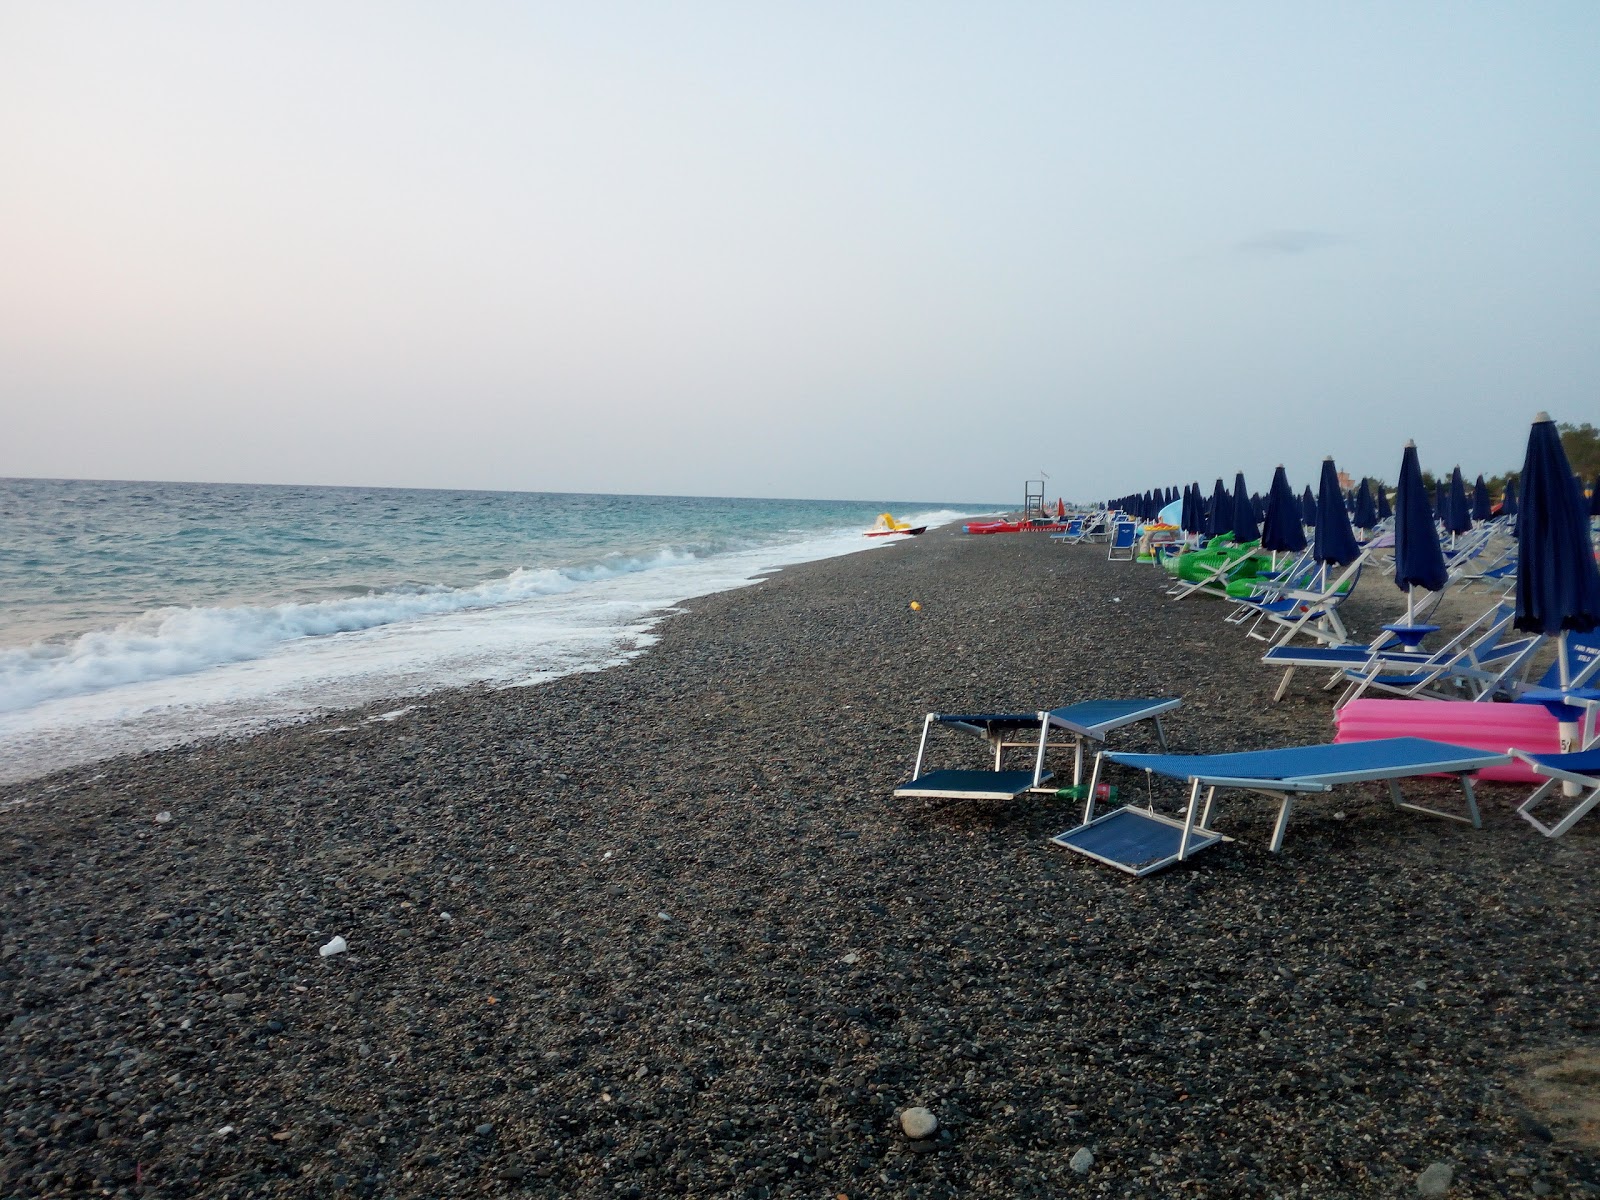 Fotografie cu Campomarzio beach cu o suprafață de apa albastra